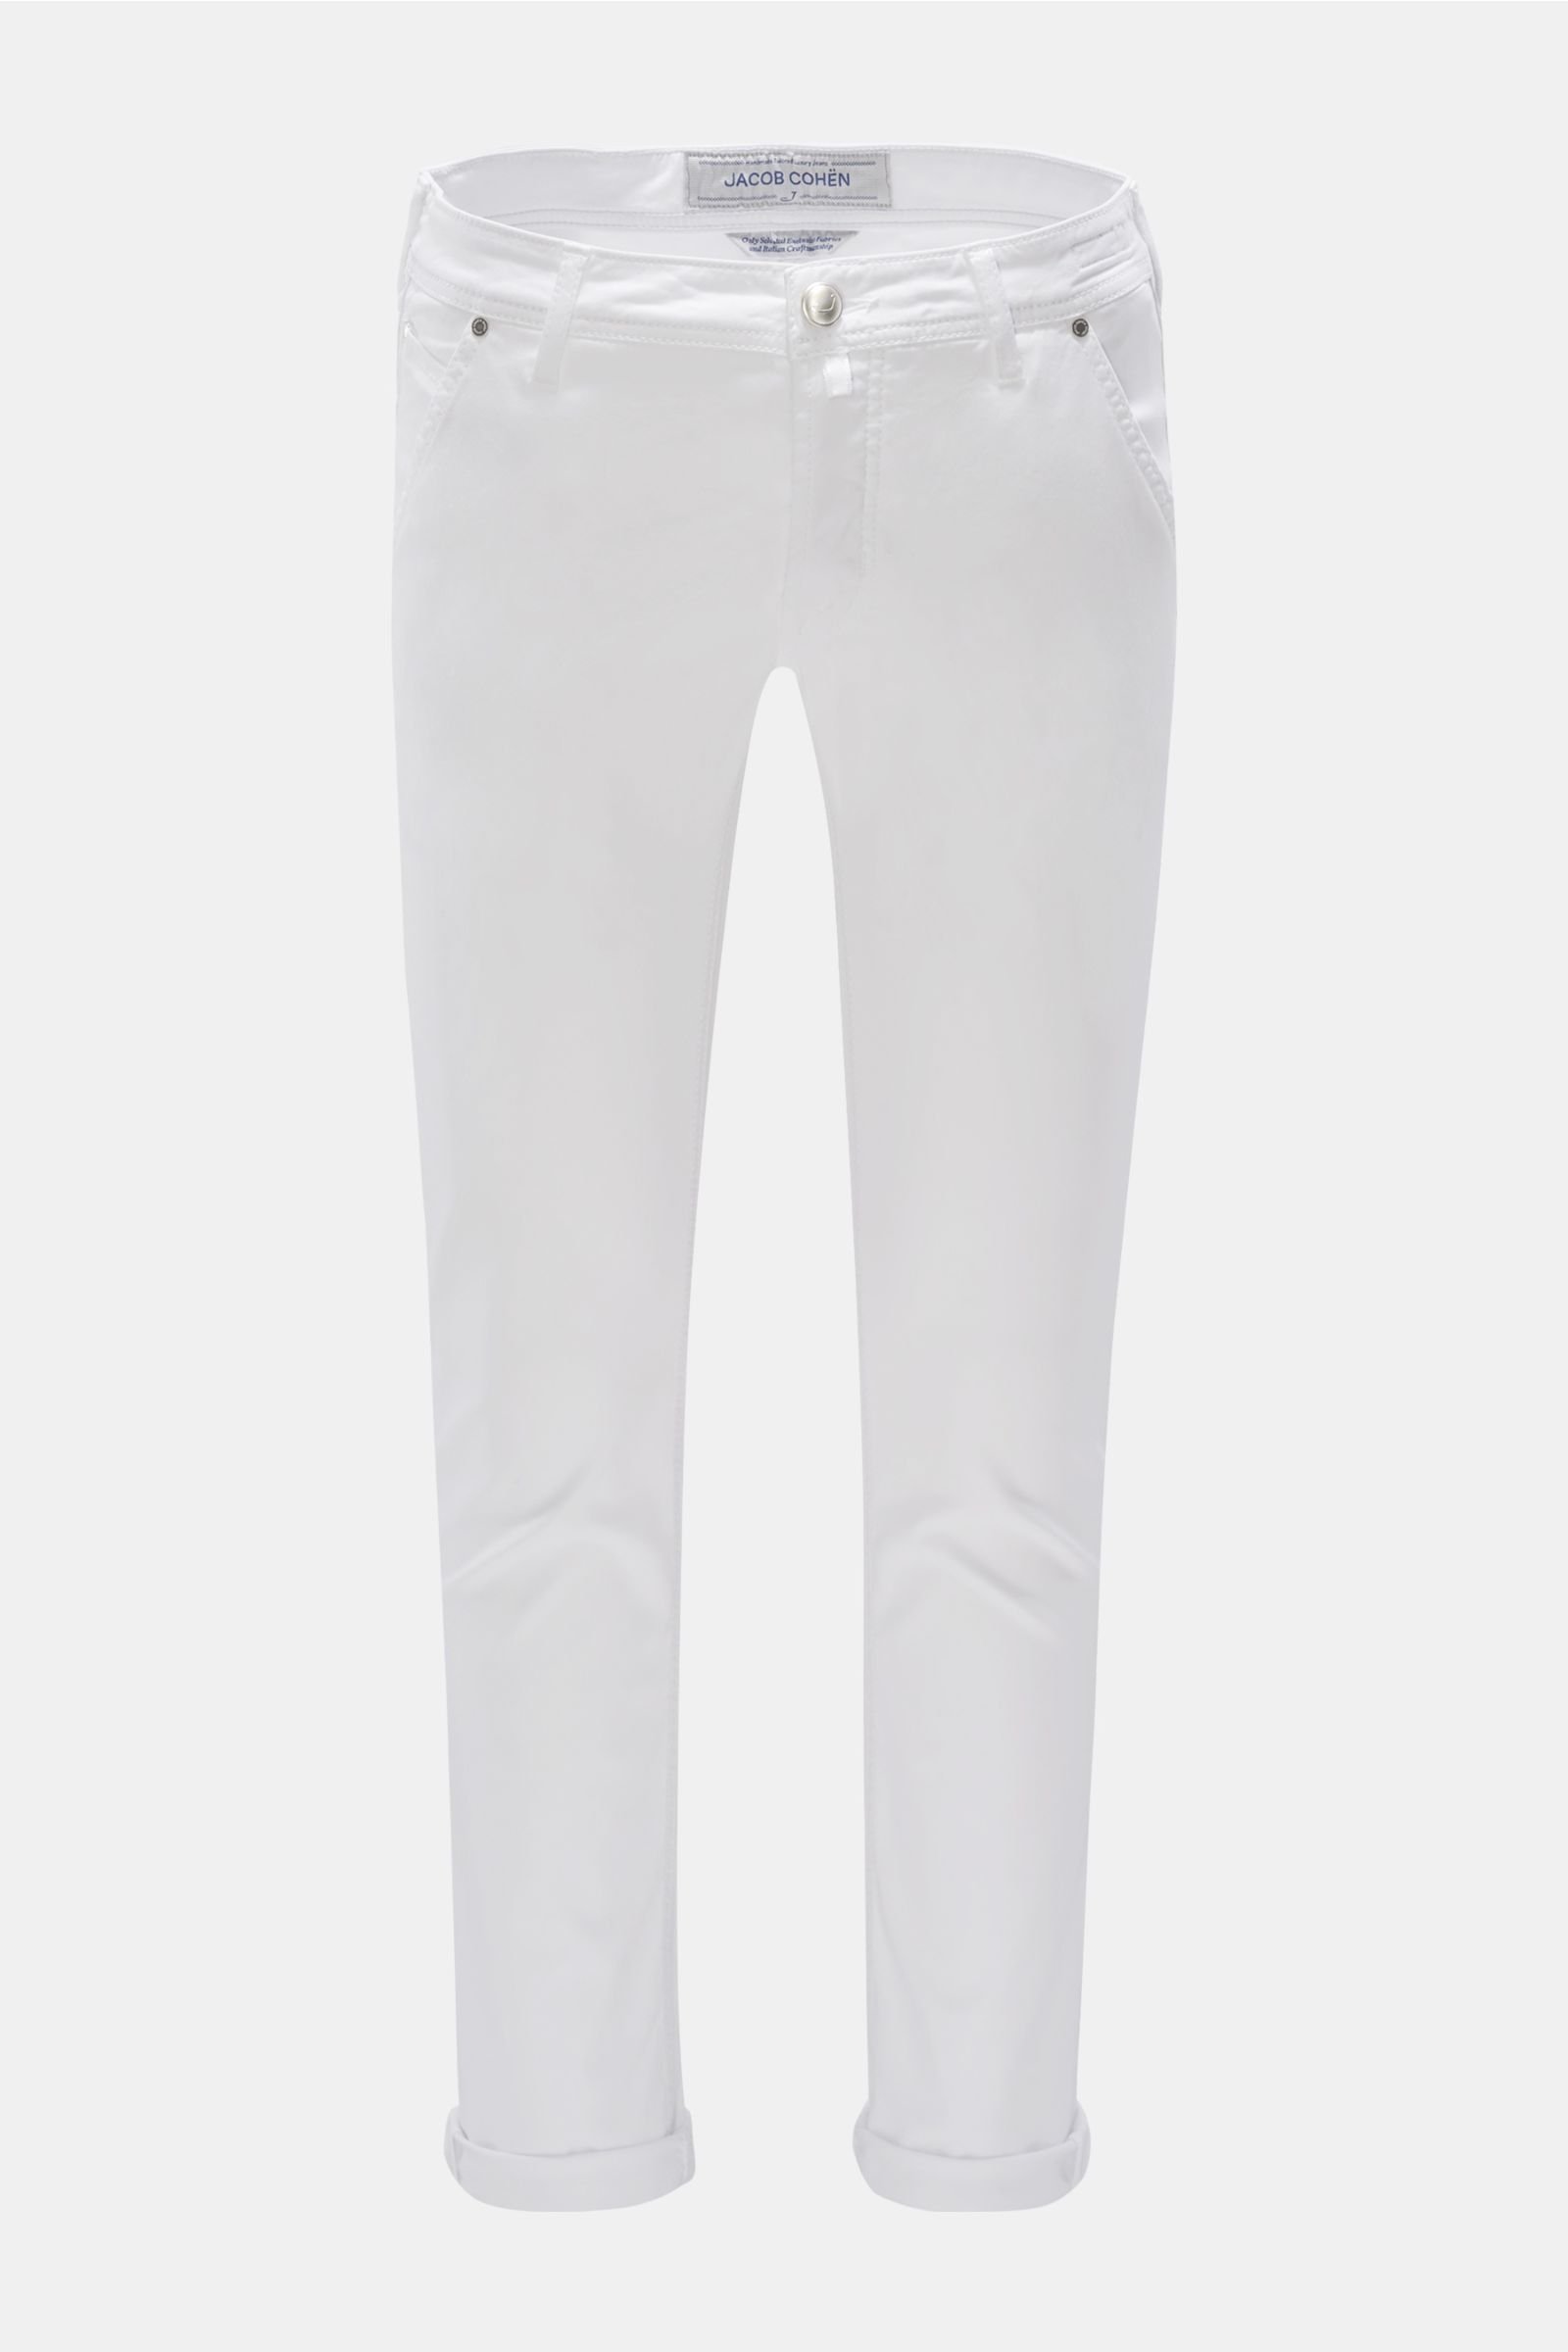 Trousers 'J613 Comfort Slim Fit' white